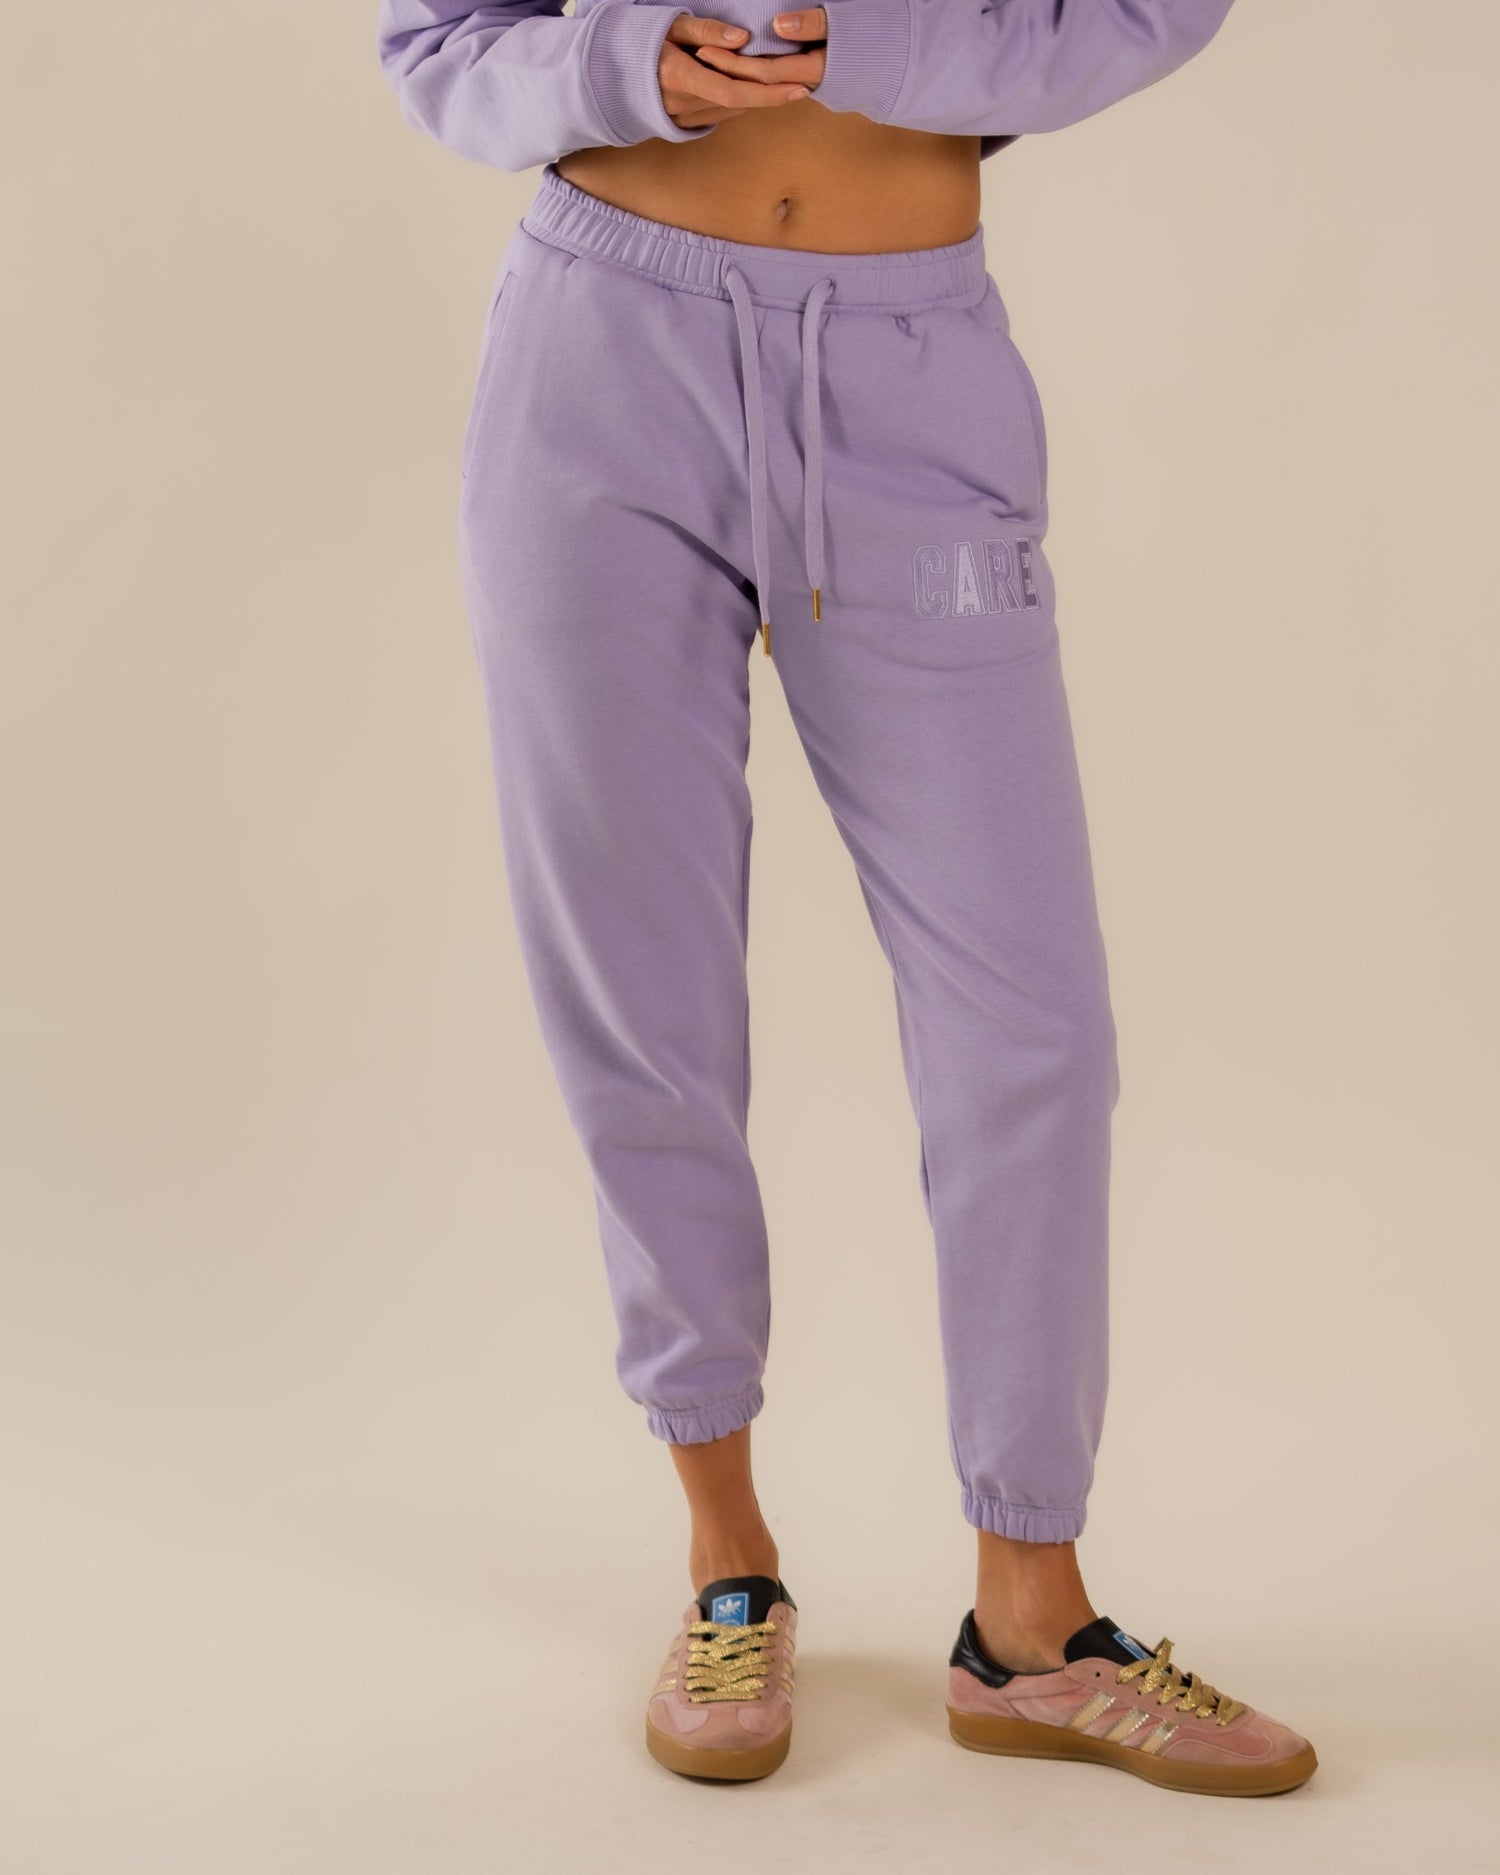 CARE Classic Sweatpants - Lilac